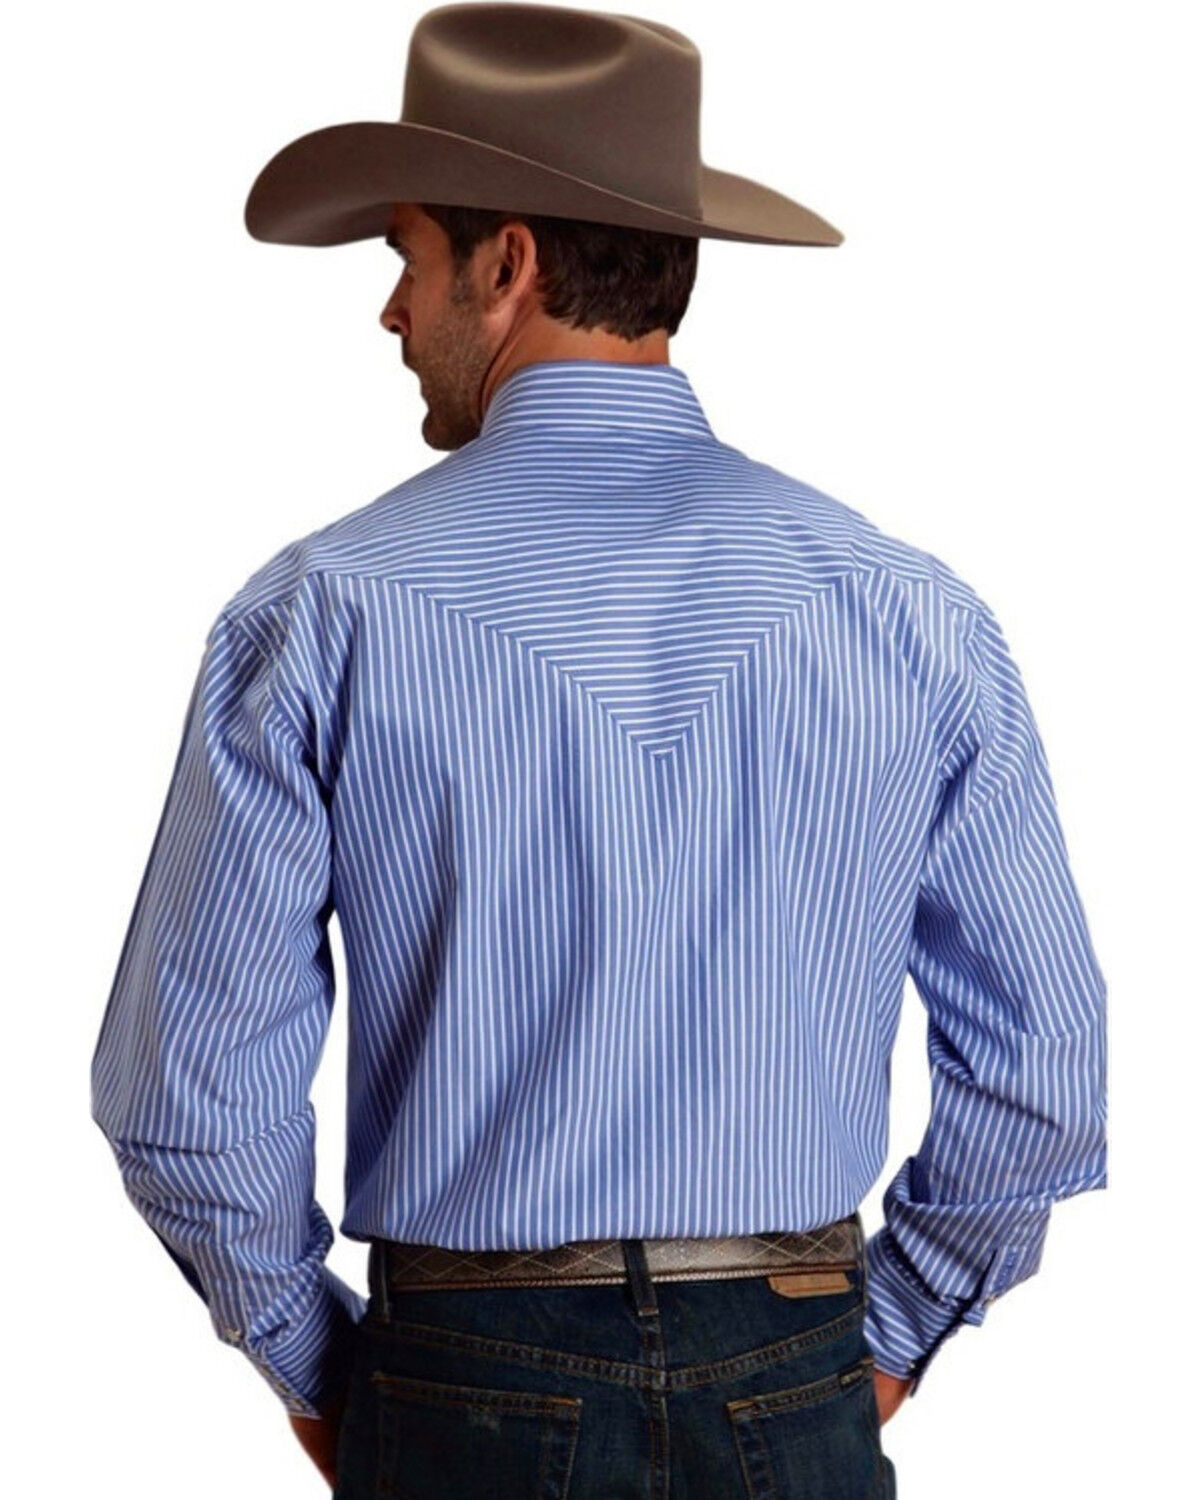 YUNY Men Pocket Front Washed Cotton Original Fit Cowboy Shirt Blouse Tops Blue 2XL